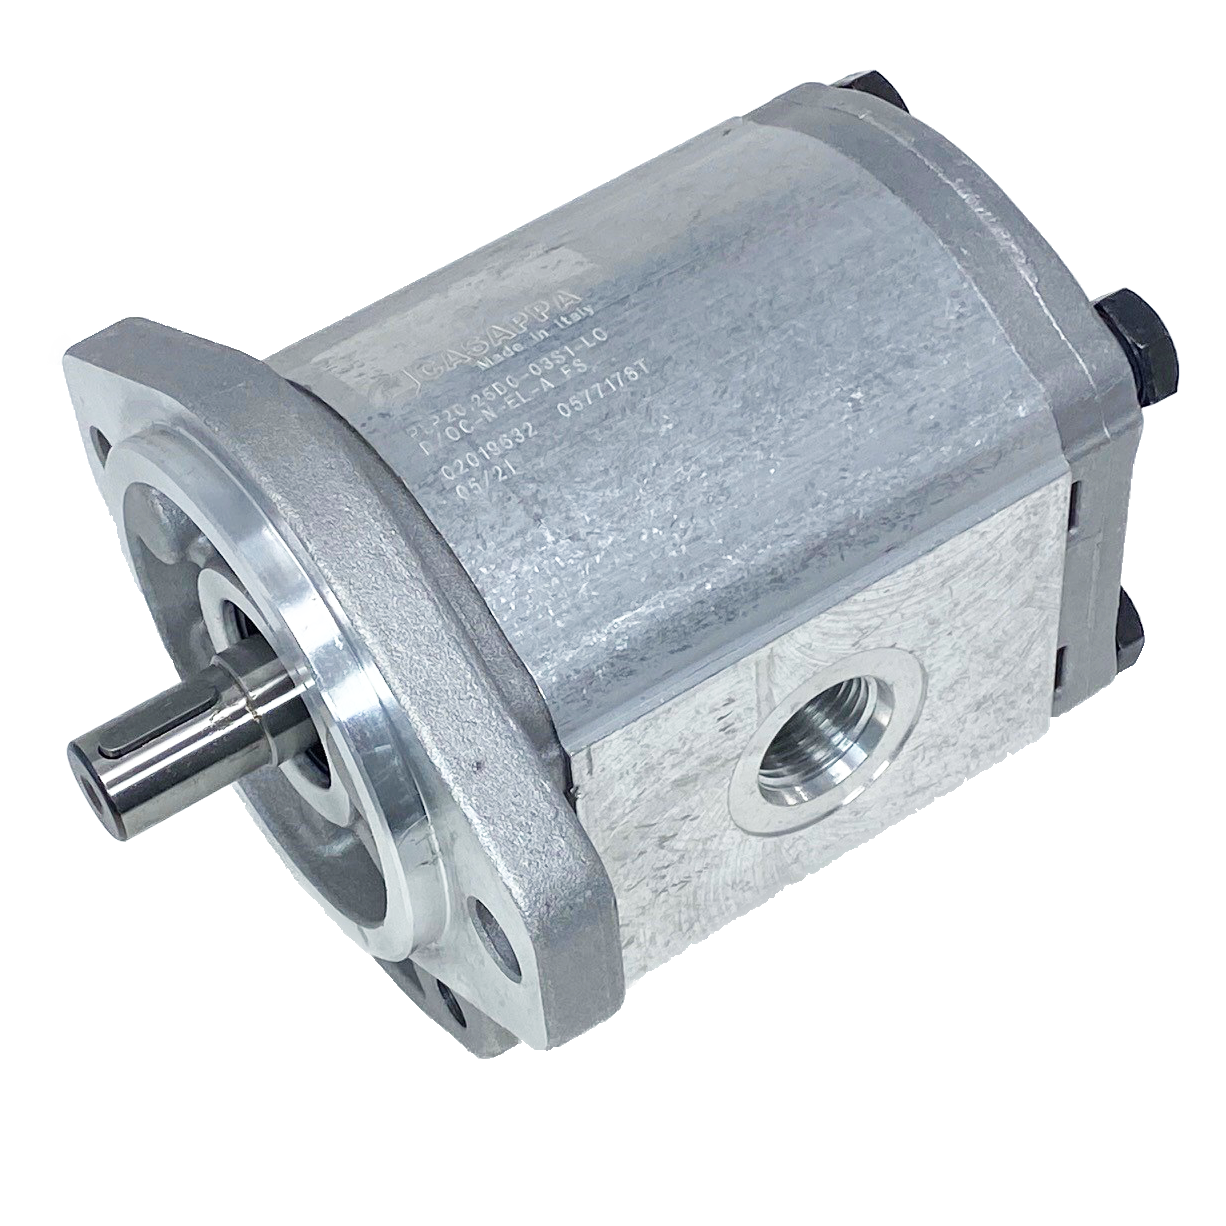 PLM20.31,5B0-31S1-LOC/OD-N-EL : Casappa Polaris Gear Motor, 33.03cc, 1885psi Rated, 2465RPM, Reversible Interior Drain, 5/8" Bore x 5/32" Key Shaft, SAE A 2-Bolt Flange, 0.625 (5/8") #10 SAE Inlet, 0.75 (3/4") #12 SAE Outlet, Aluminum Body & Flange